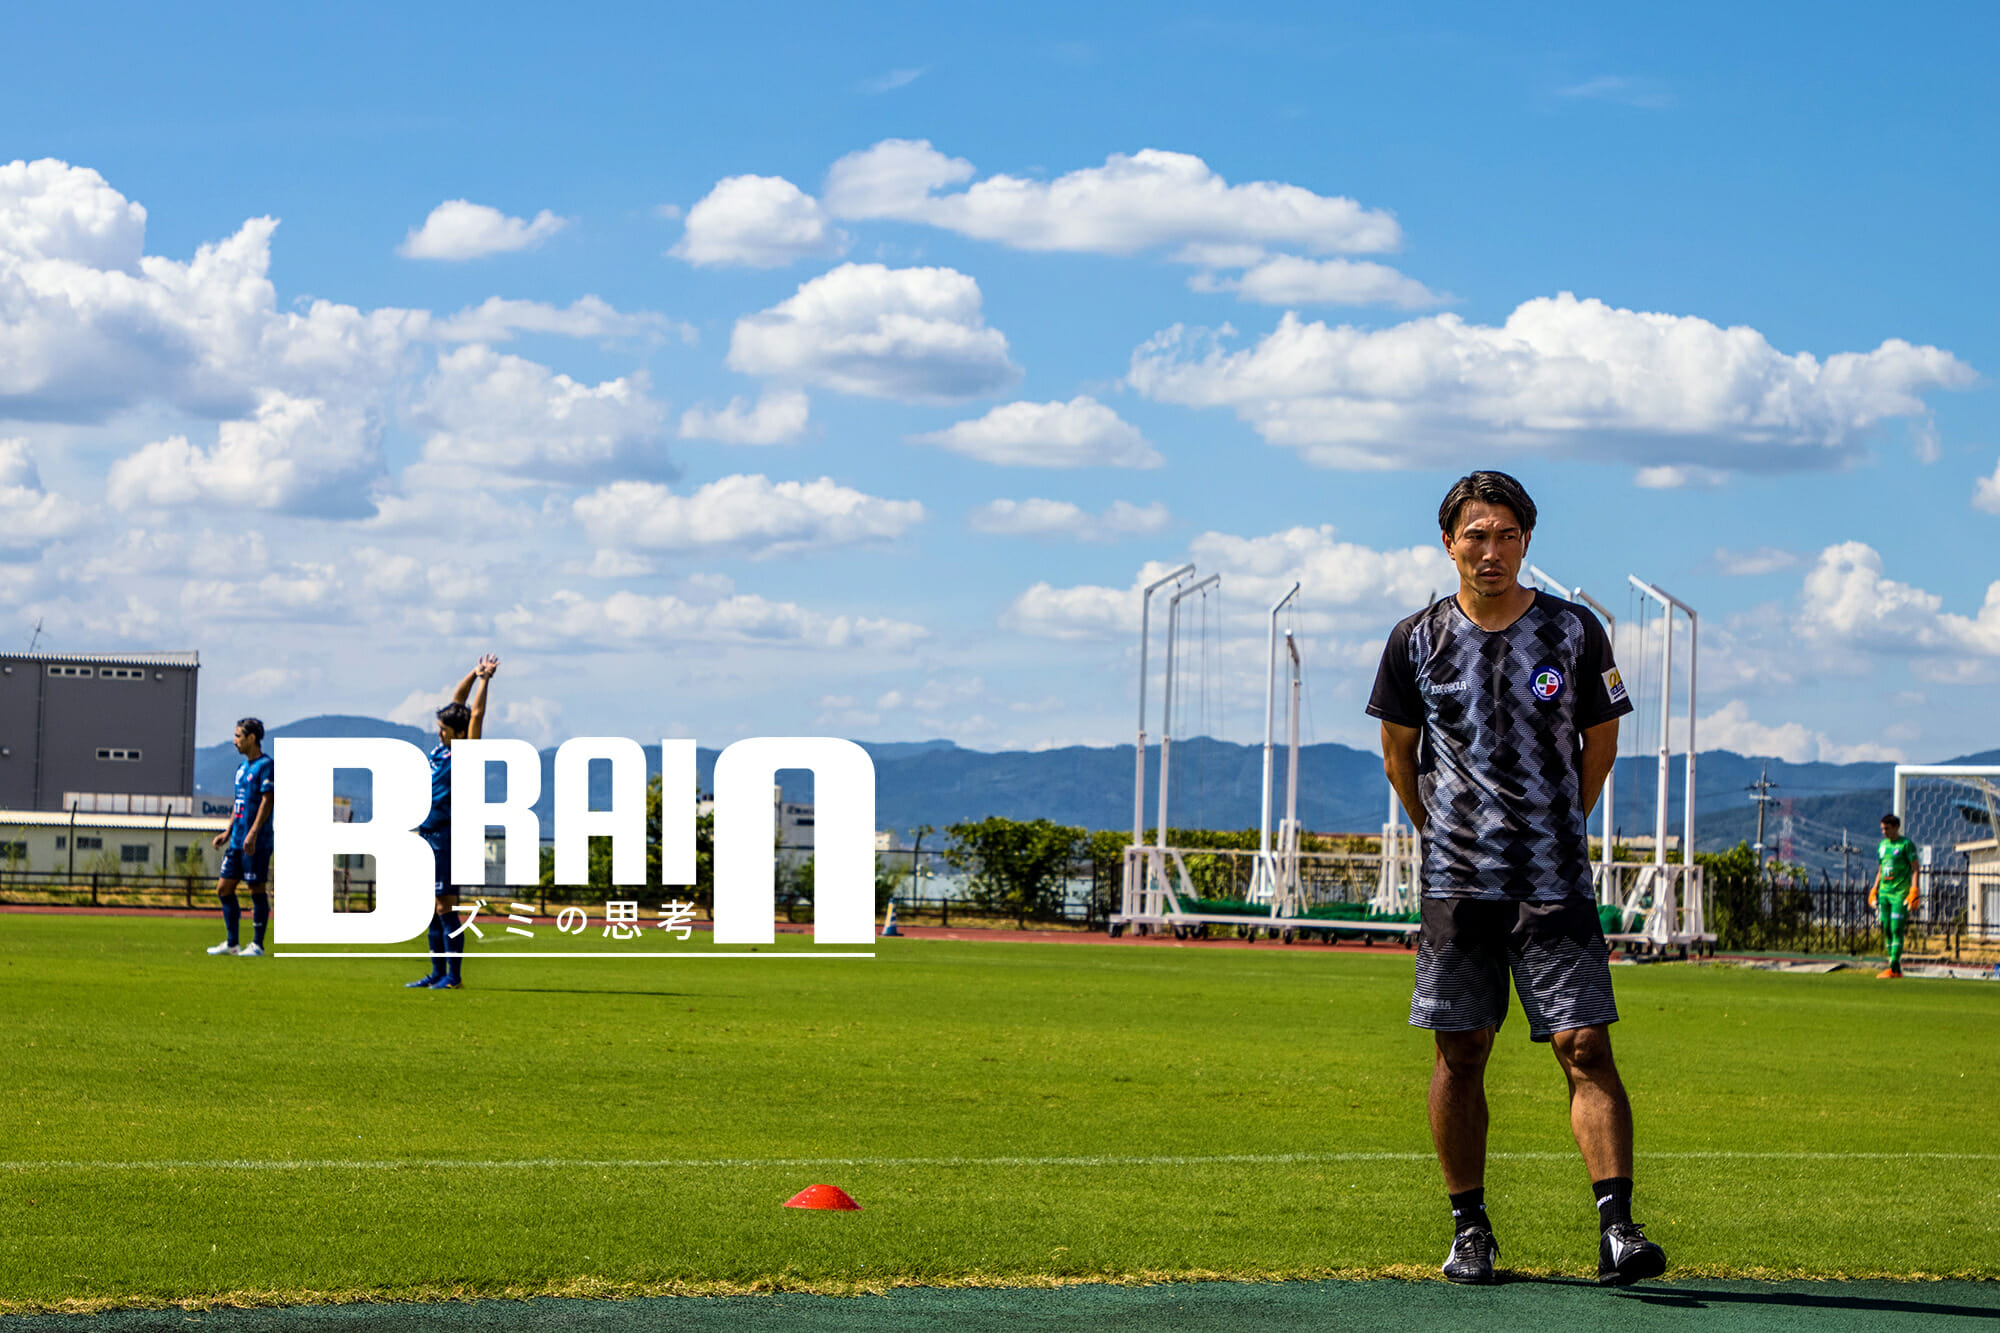 Vol 11 ホームゲーム 小川佳純 Reibola 新しいサッカーメディア